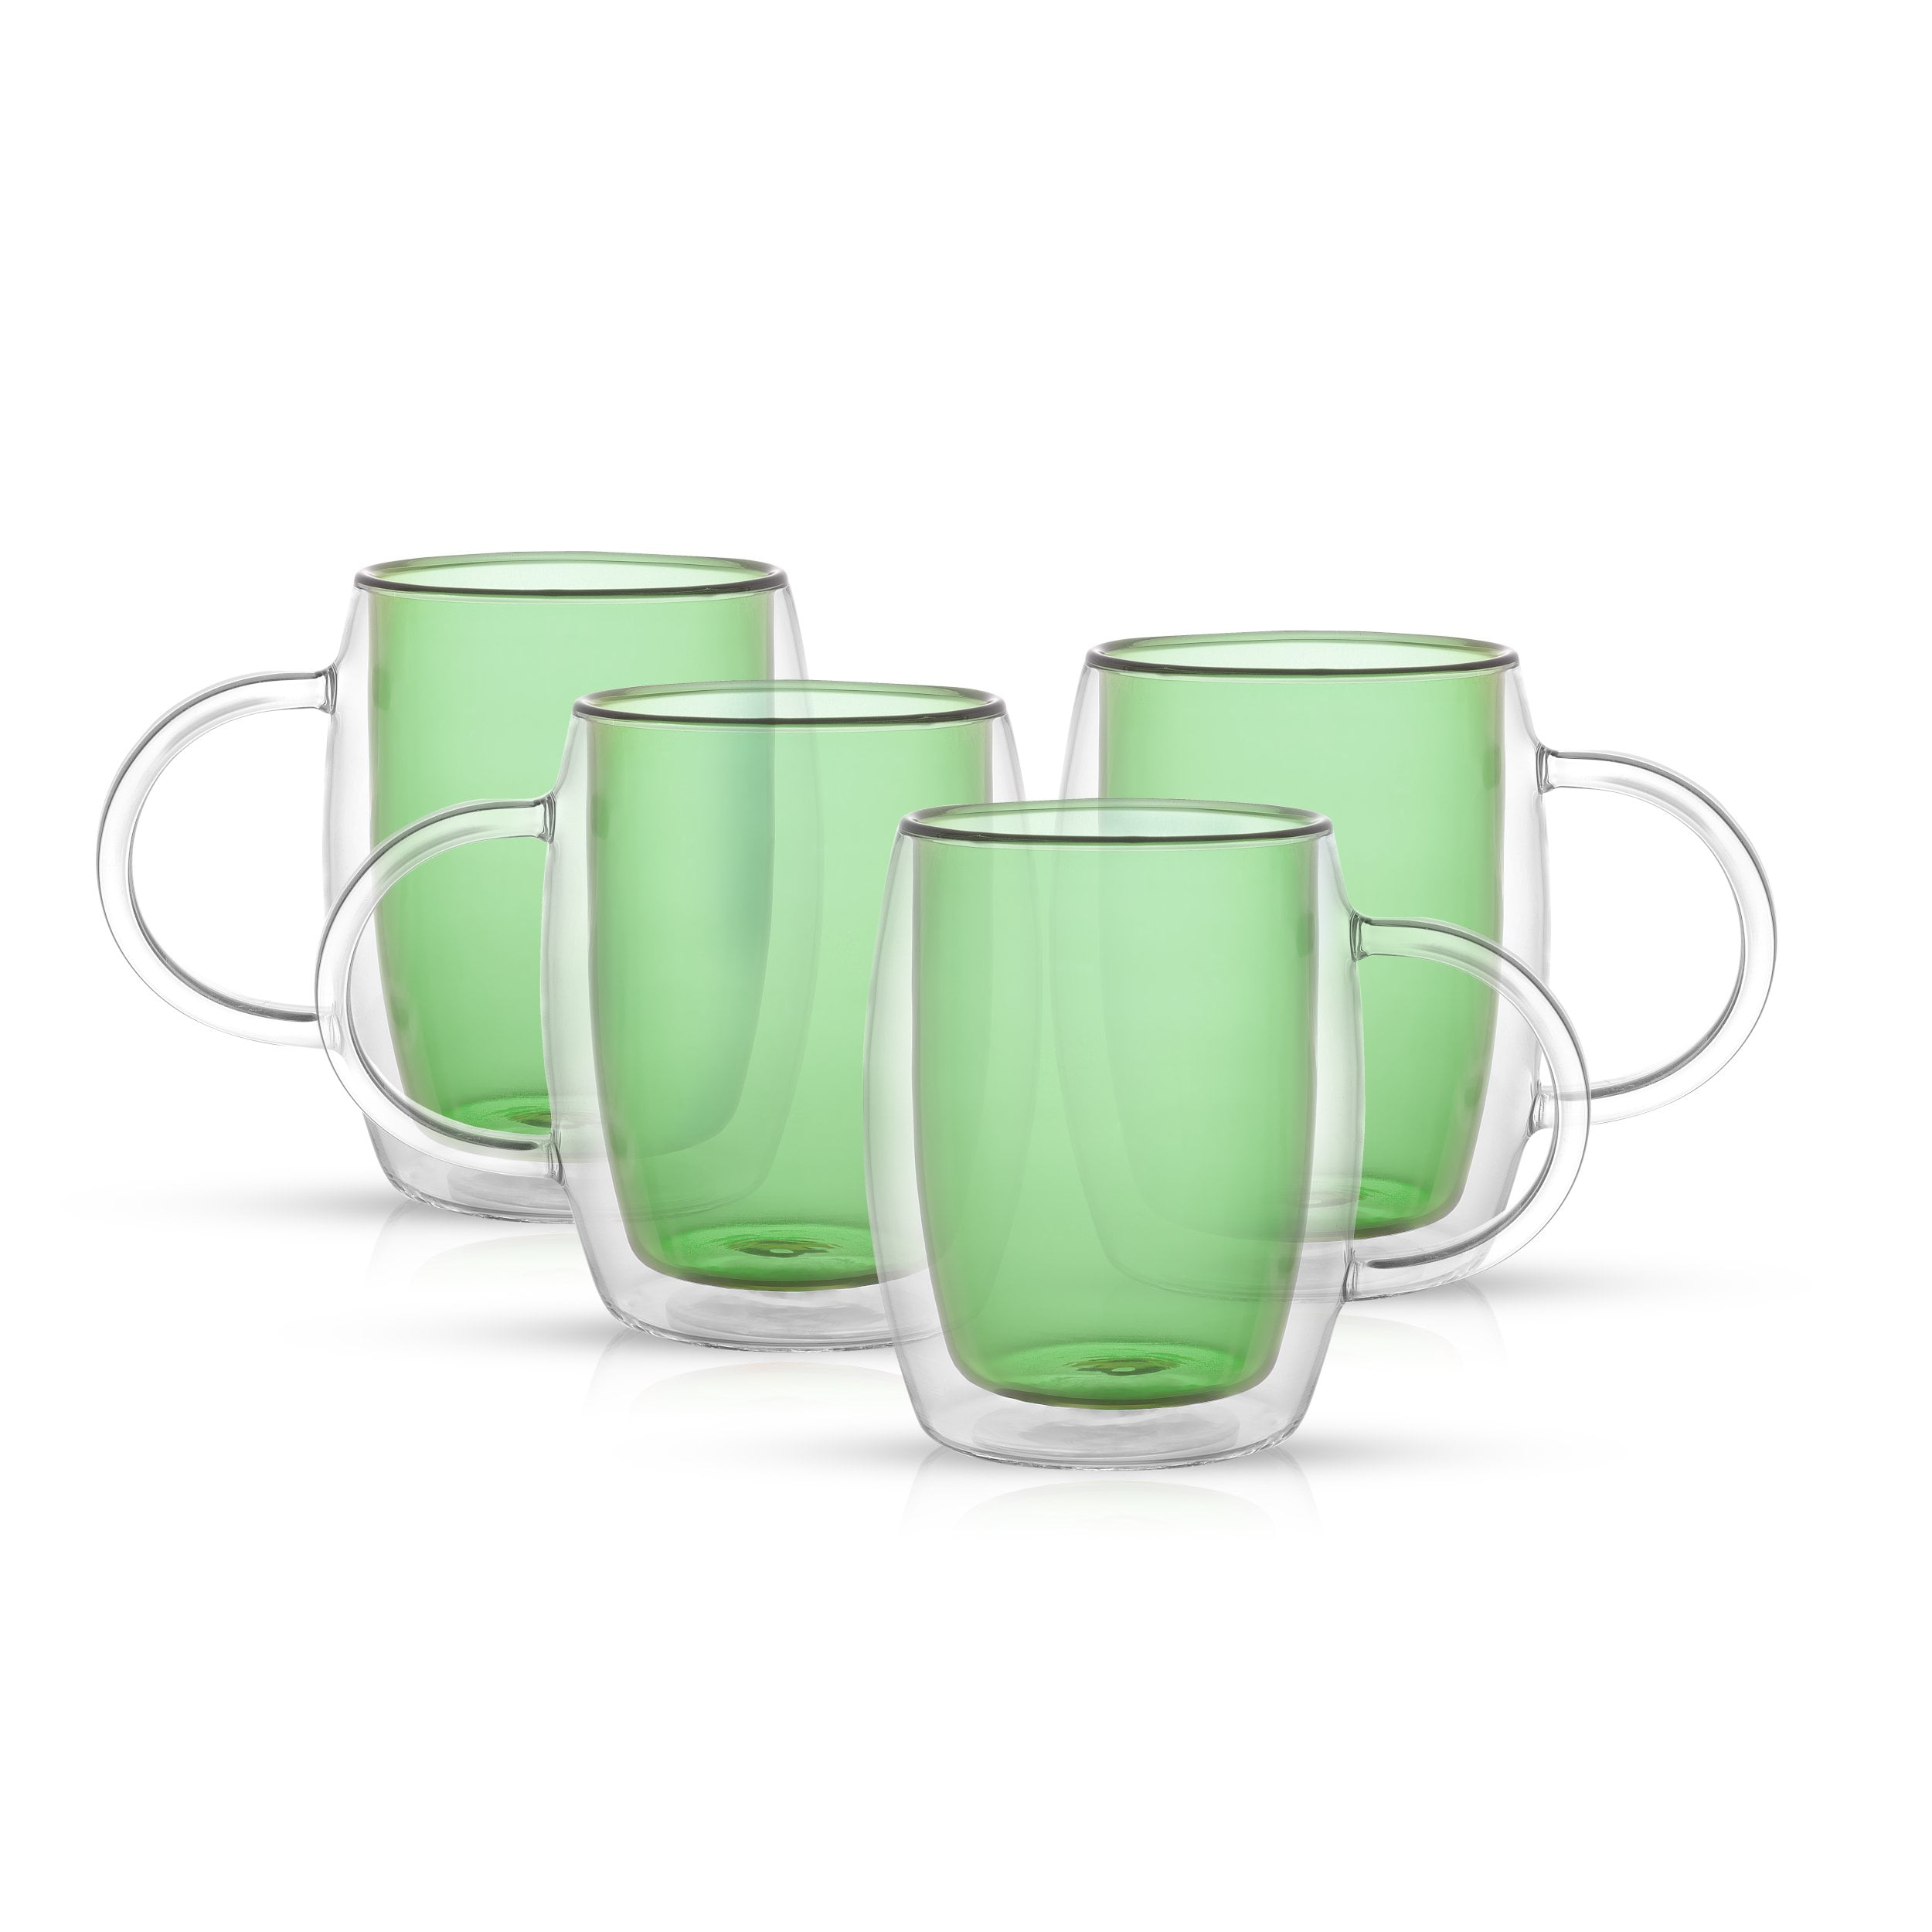 JoyJolt Aroma Double Wall Colored Glass Coffee Mugs - Green - Set of 4 